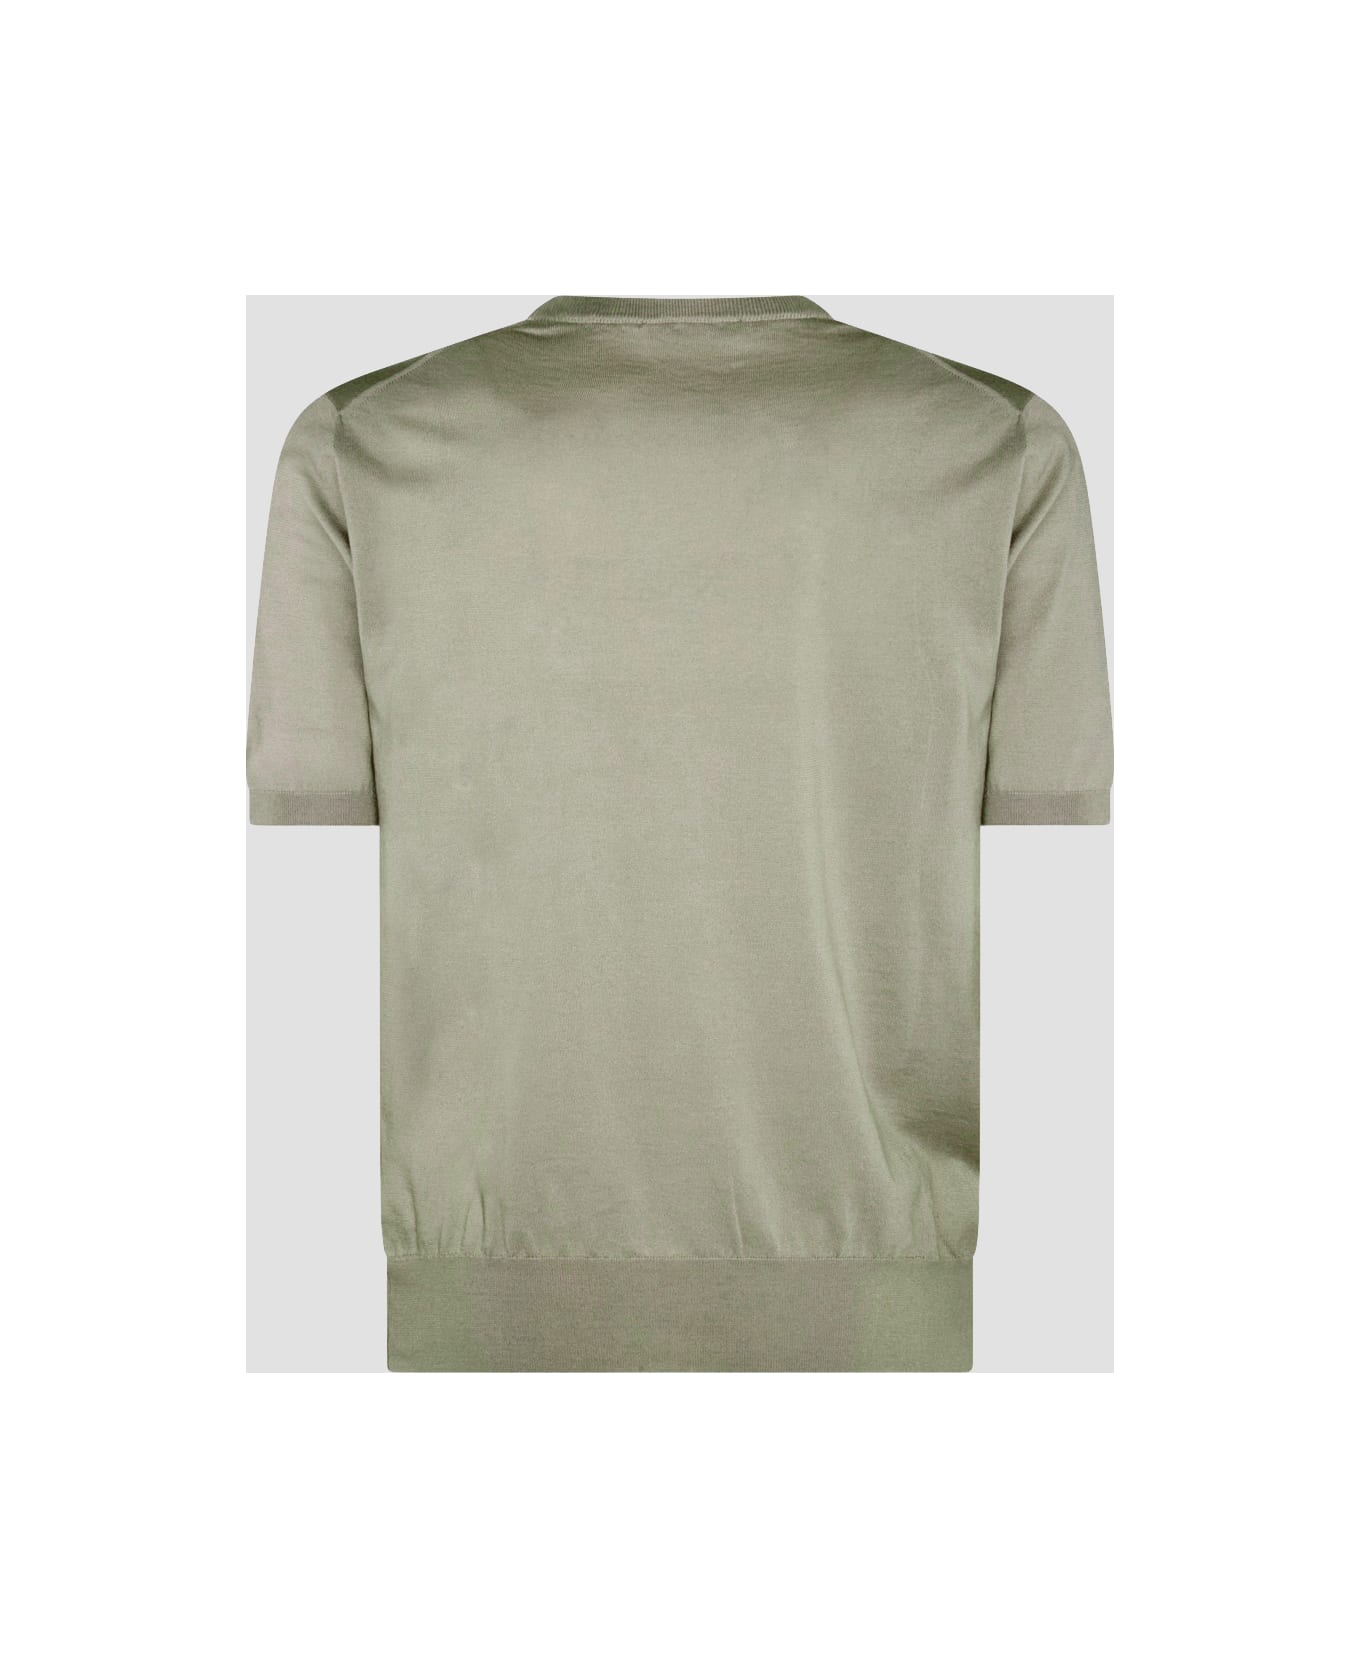 Cruciani Military Green Cotton T-shirt - Military